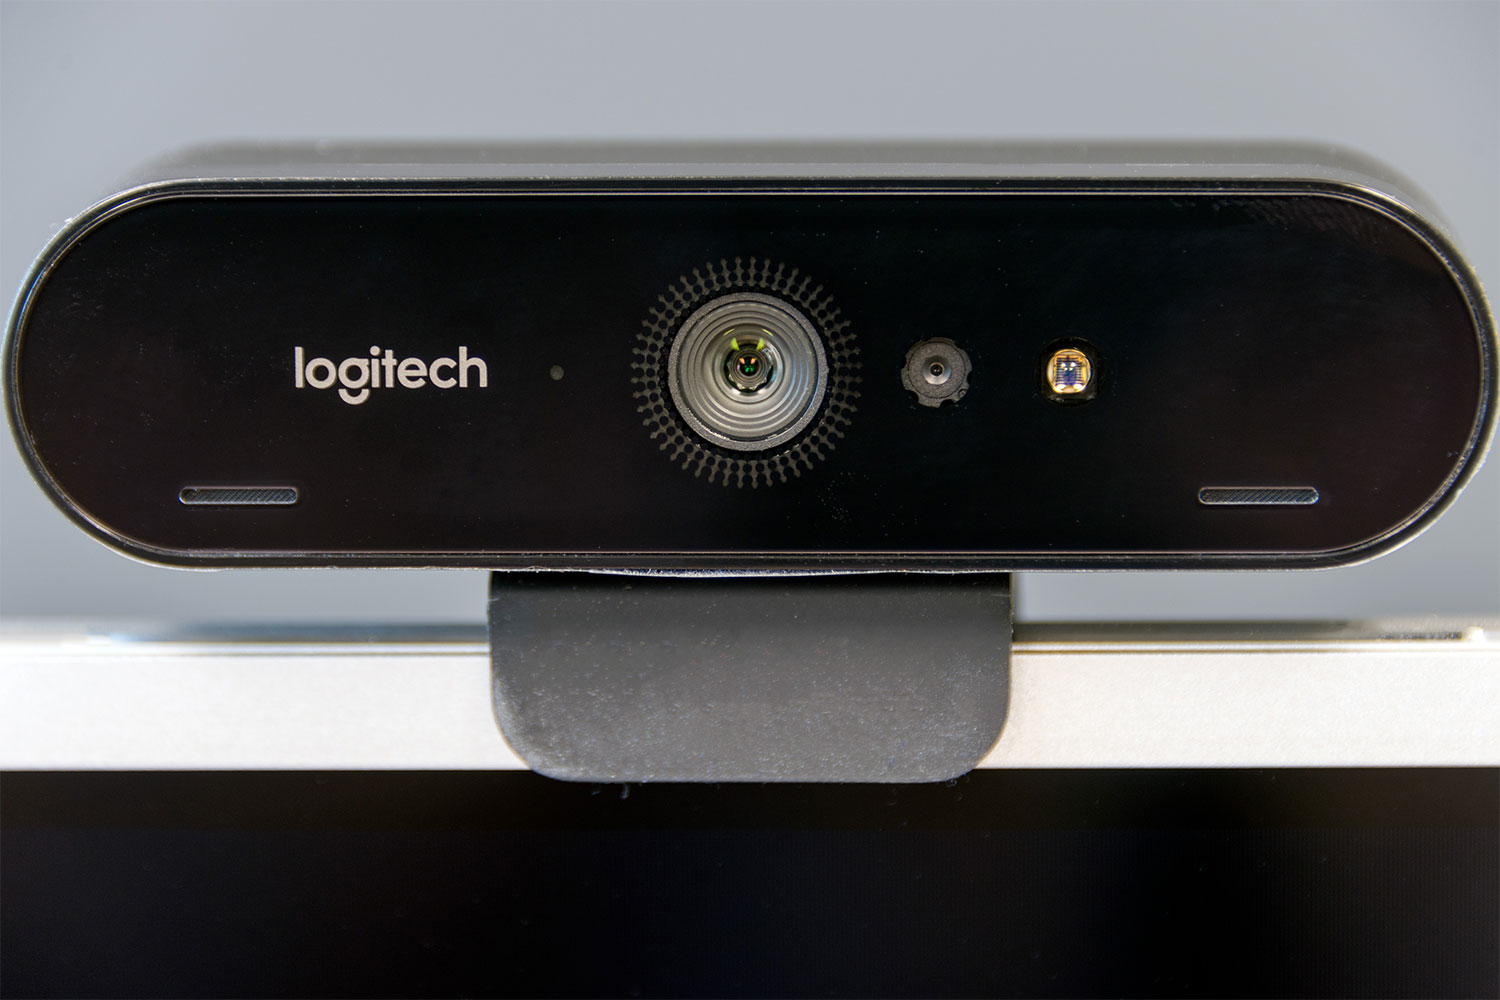  Logitech Brio 4K HD Webcam [Latest Version] with